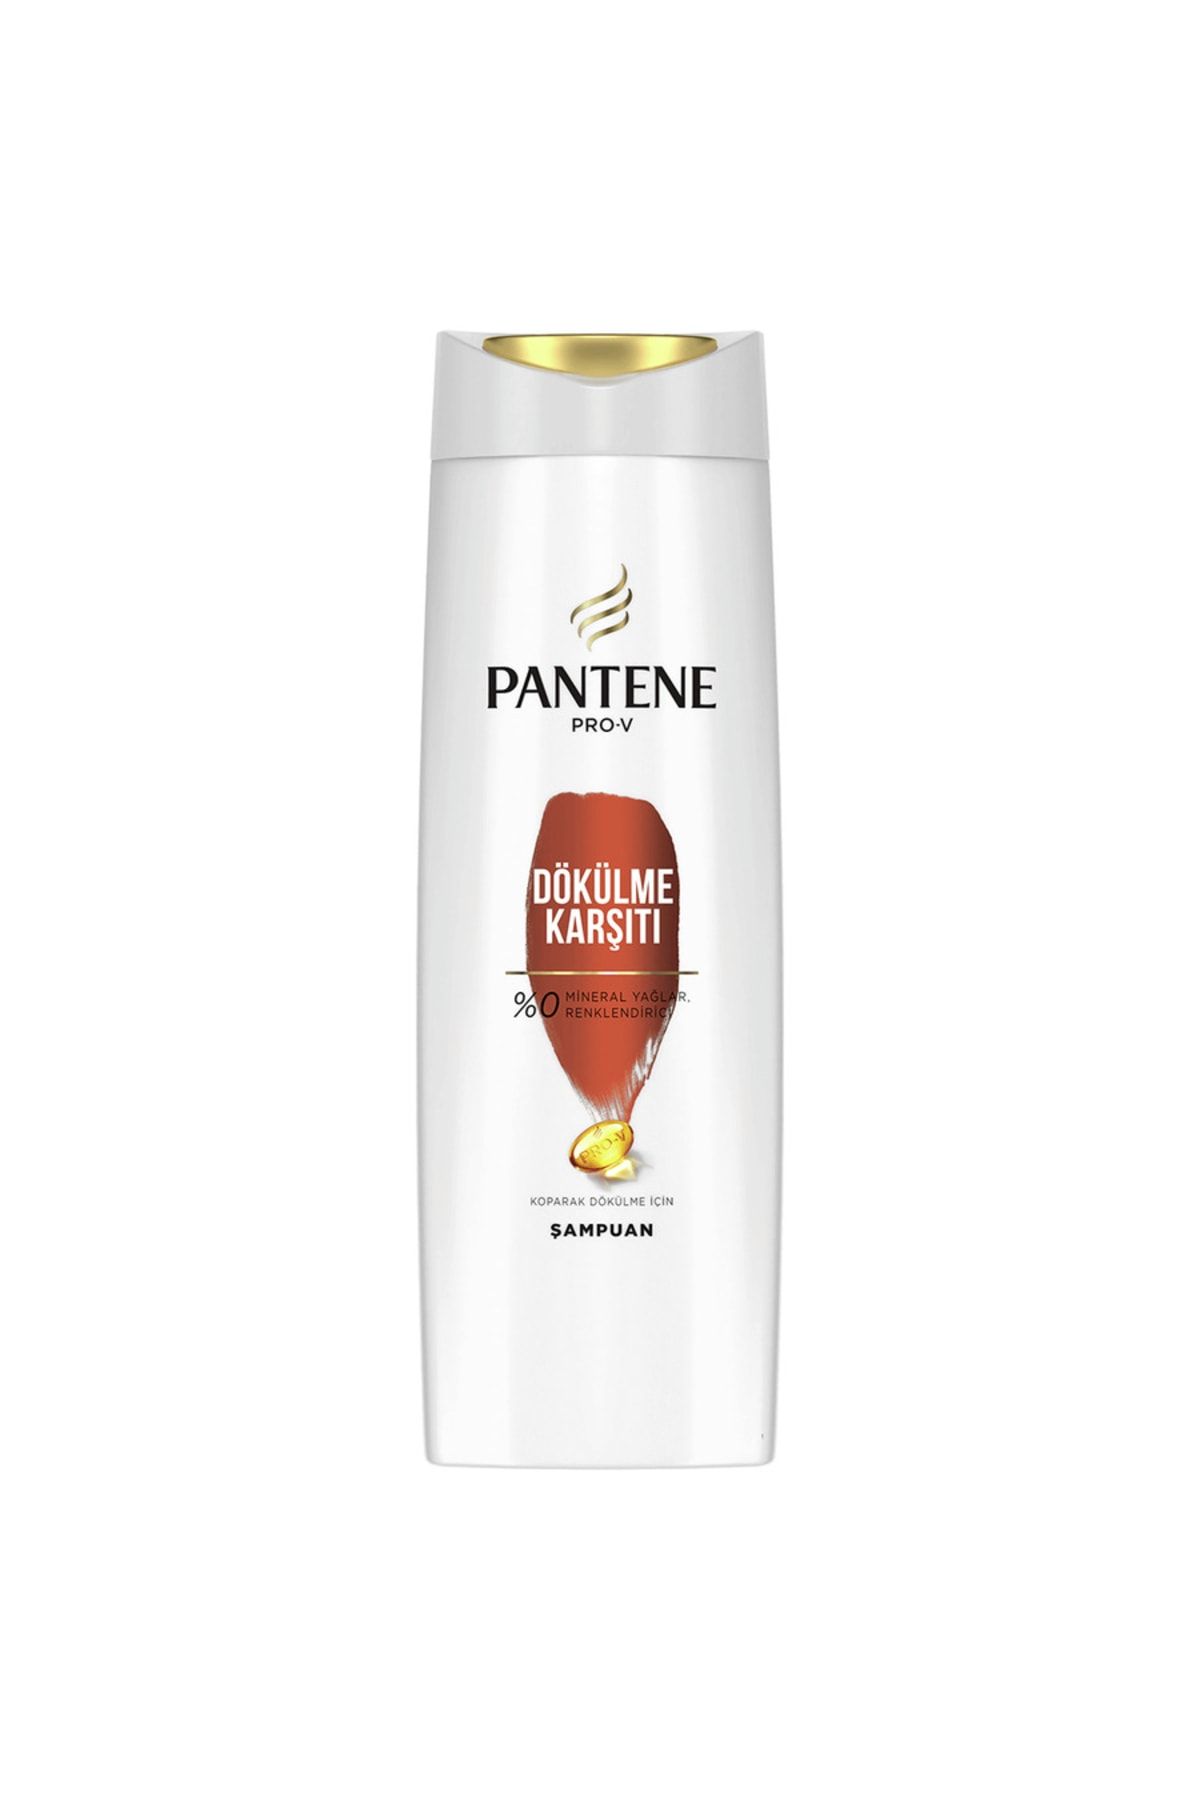 Pantene Marka: Pro-v Şampuan Dökülme Karşıtı 400 Ml Kategori: Şampuan